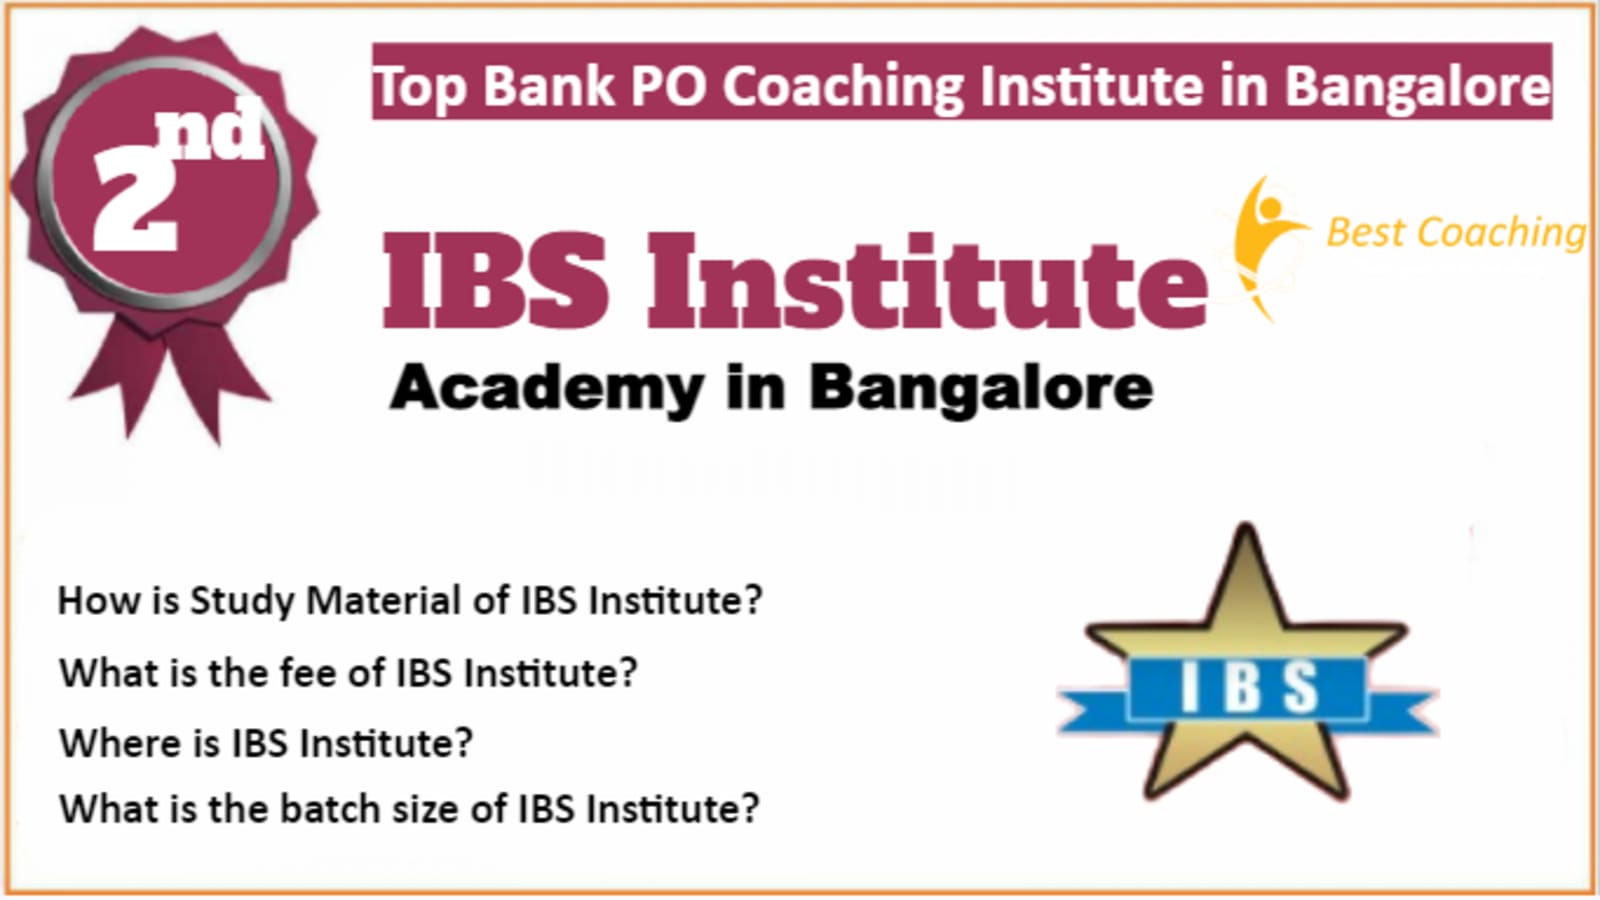 Rank 2 Best Bank PO Coaching in Bangalore